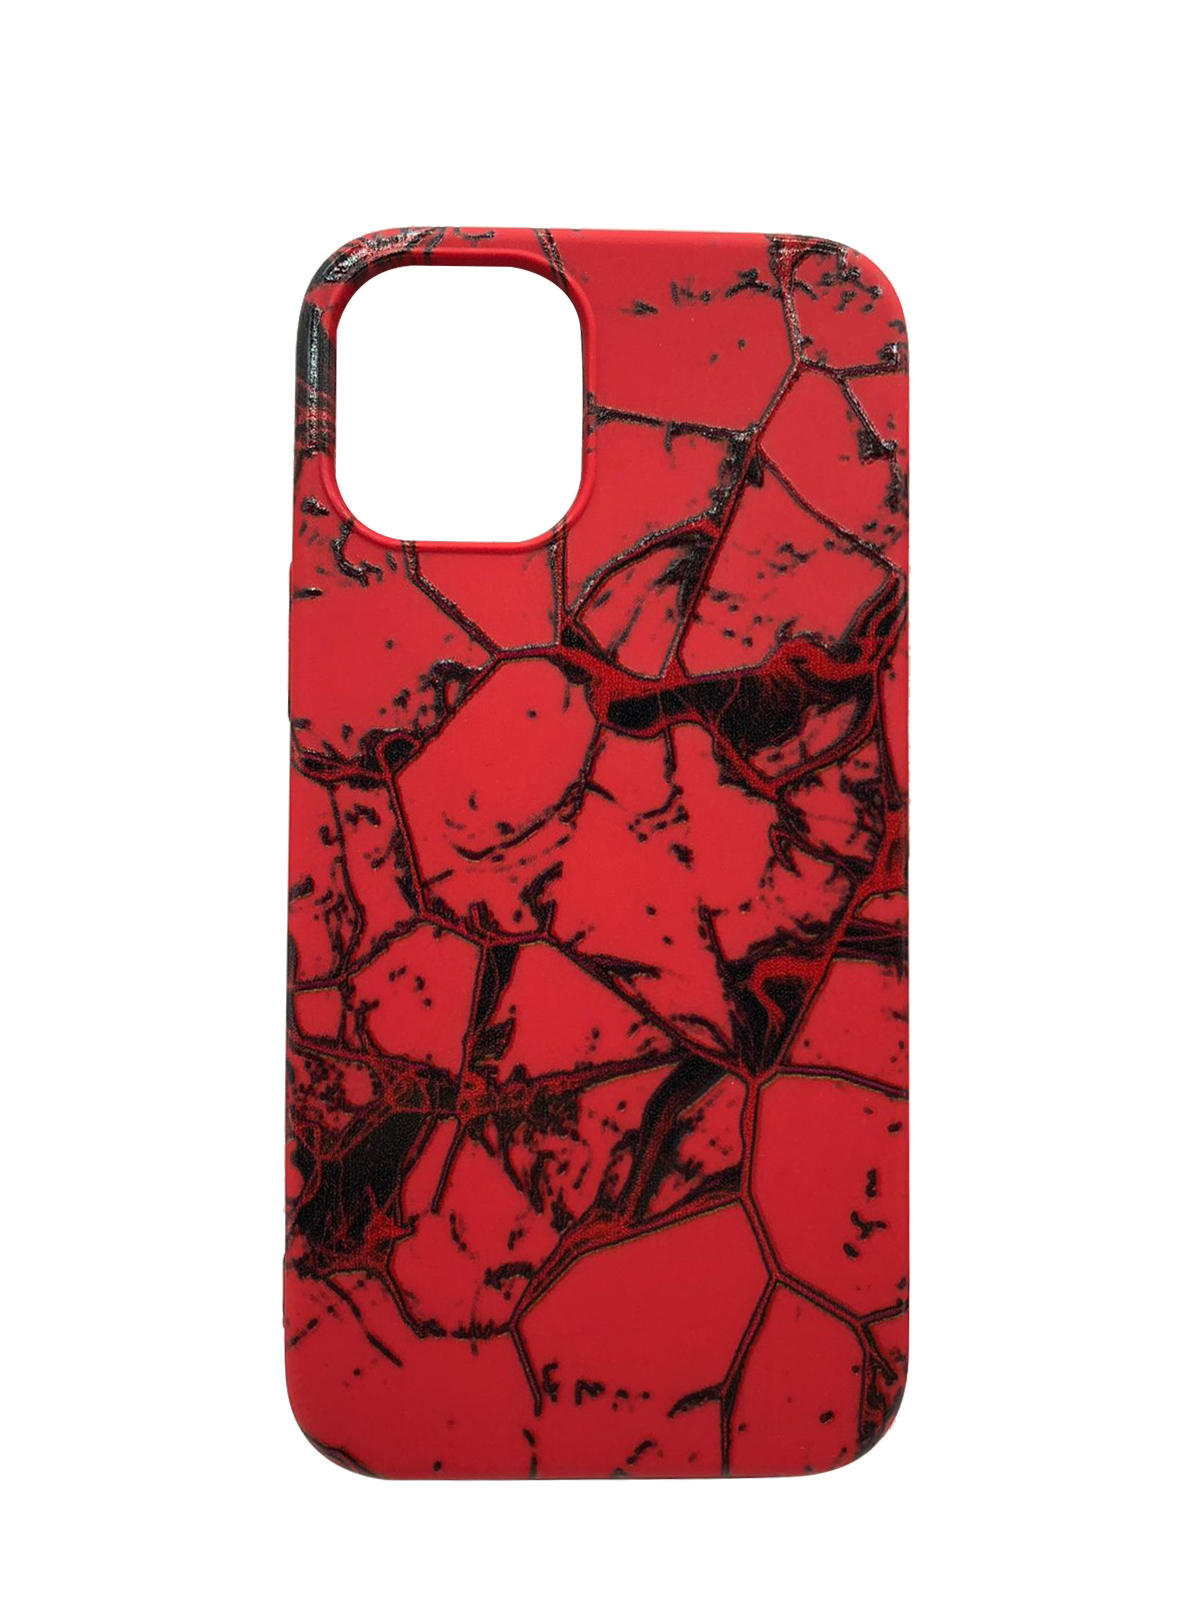 Silicone Case iPHONE 12 MINI  RED